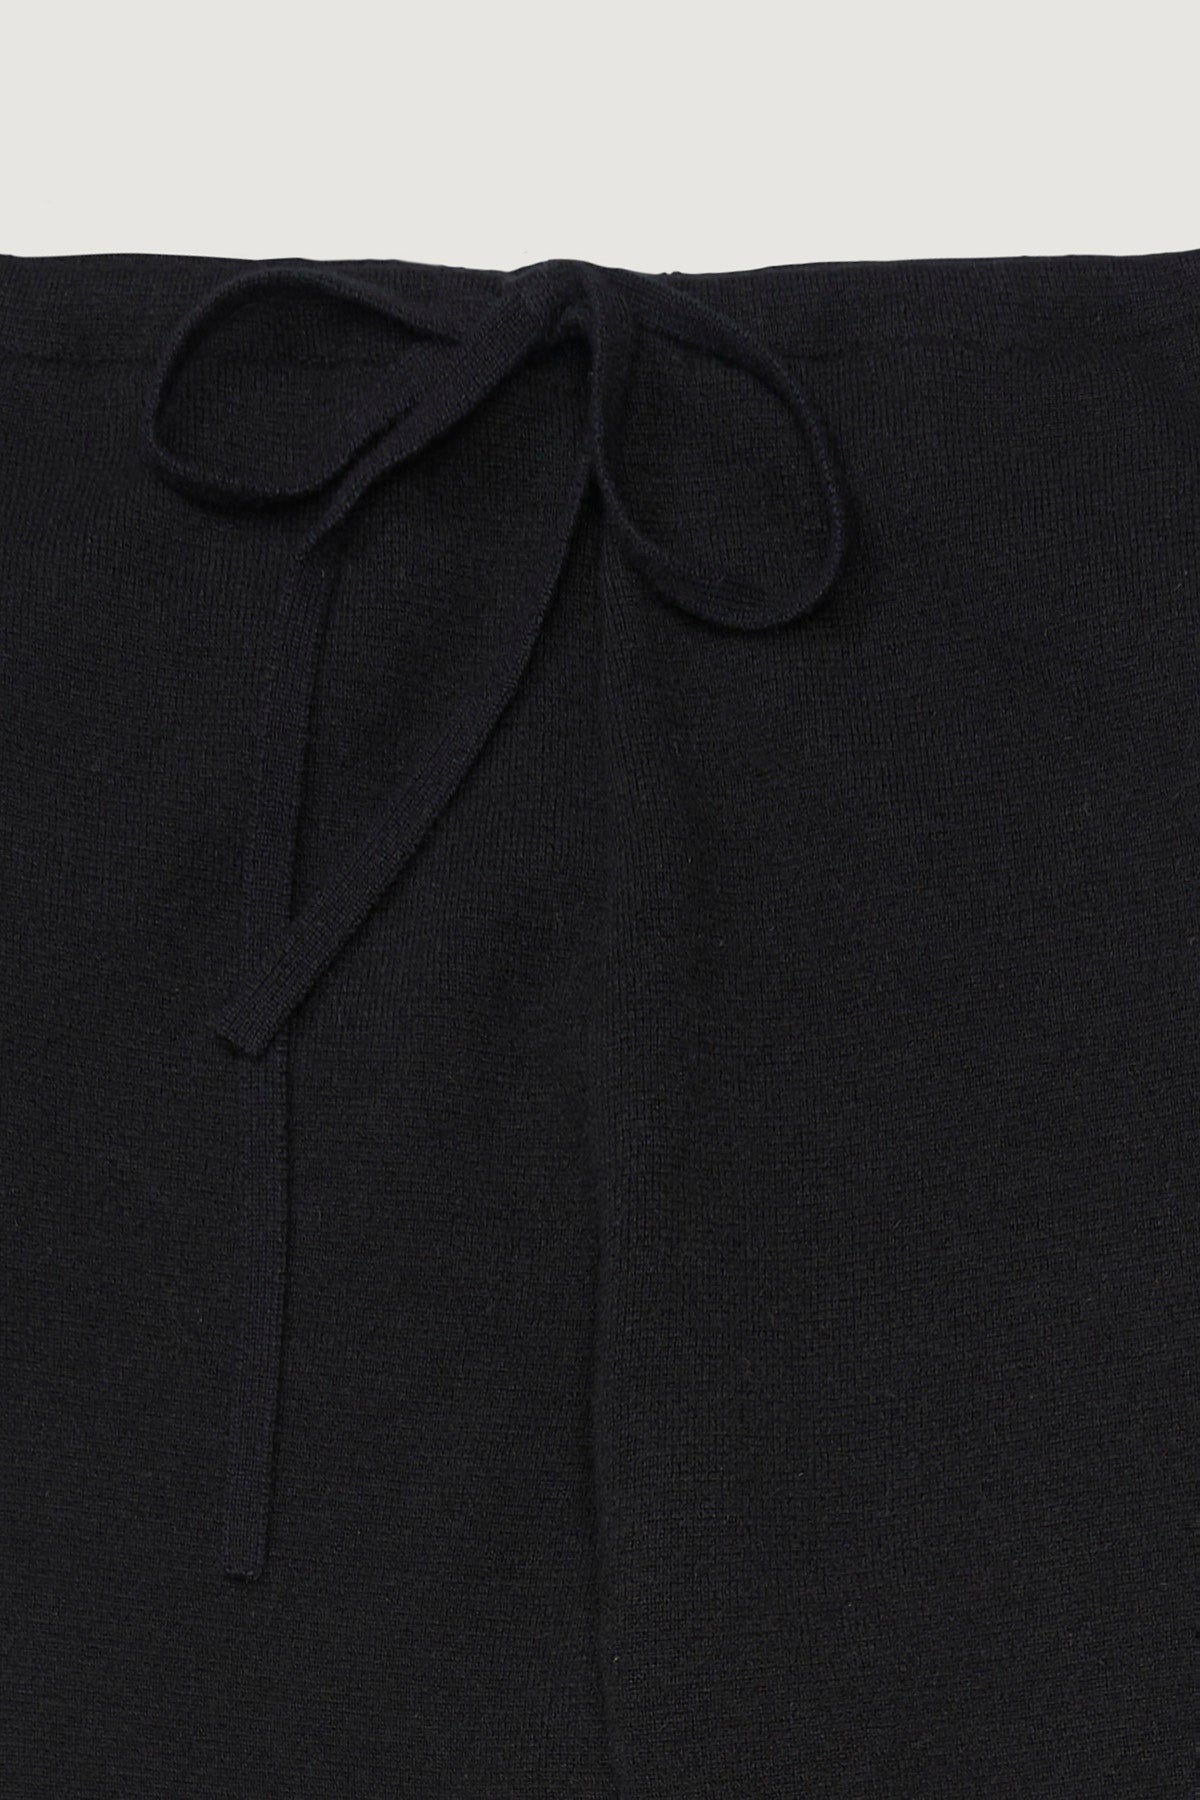 Black Milano Knit Cashmere Trouser